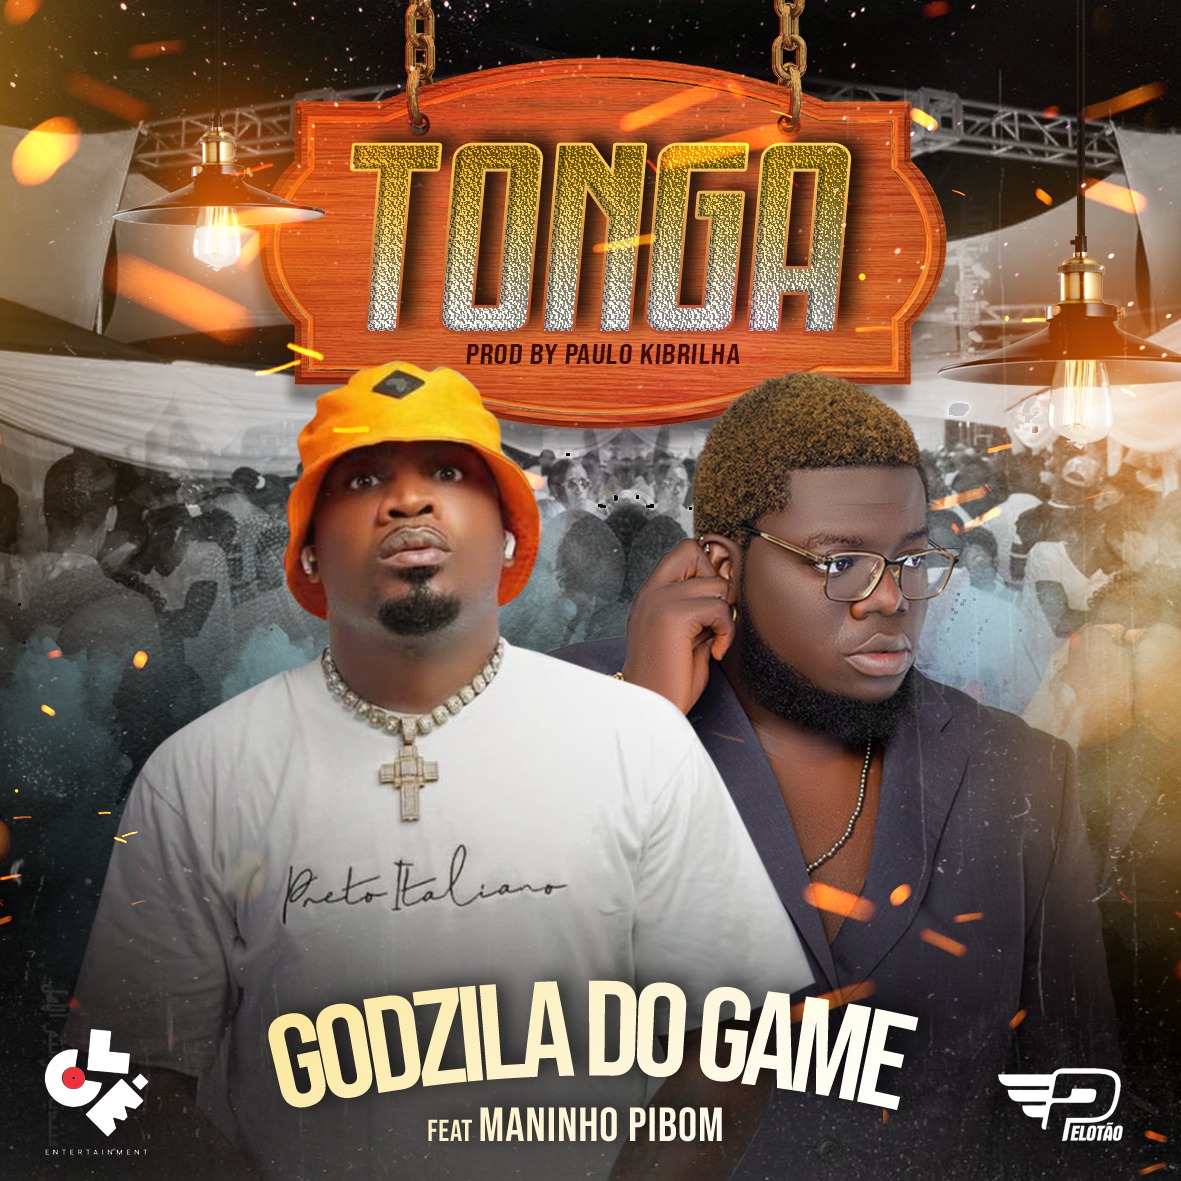 Godzila Do Game Feat. Maninho Pibom - Tonga Afro House mp3 download